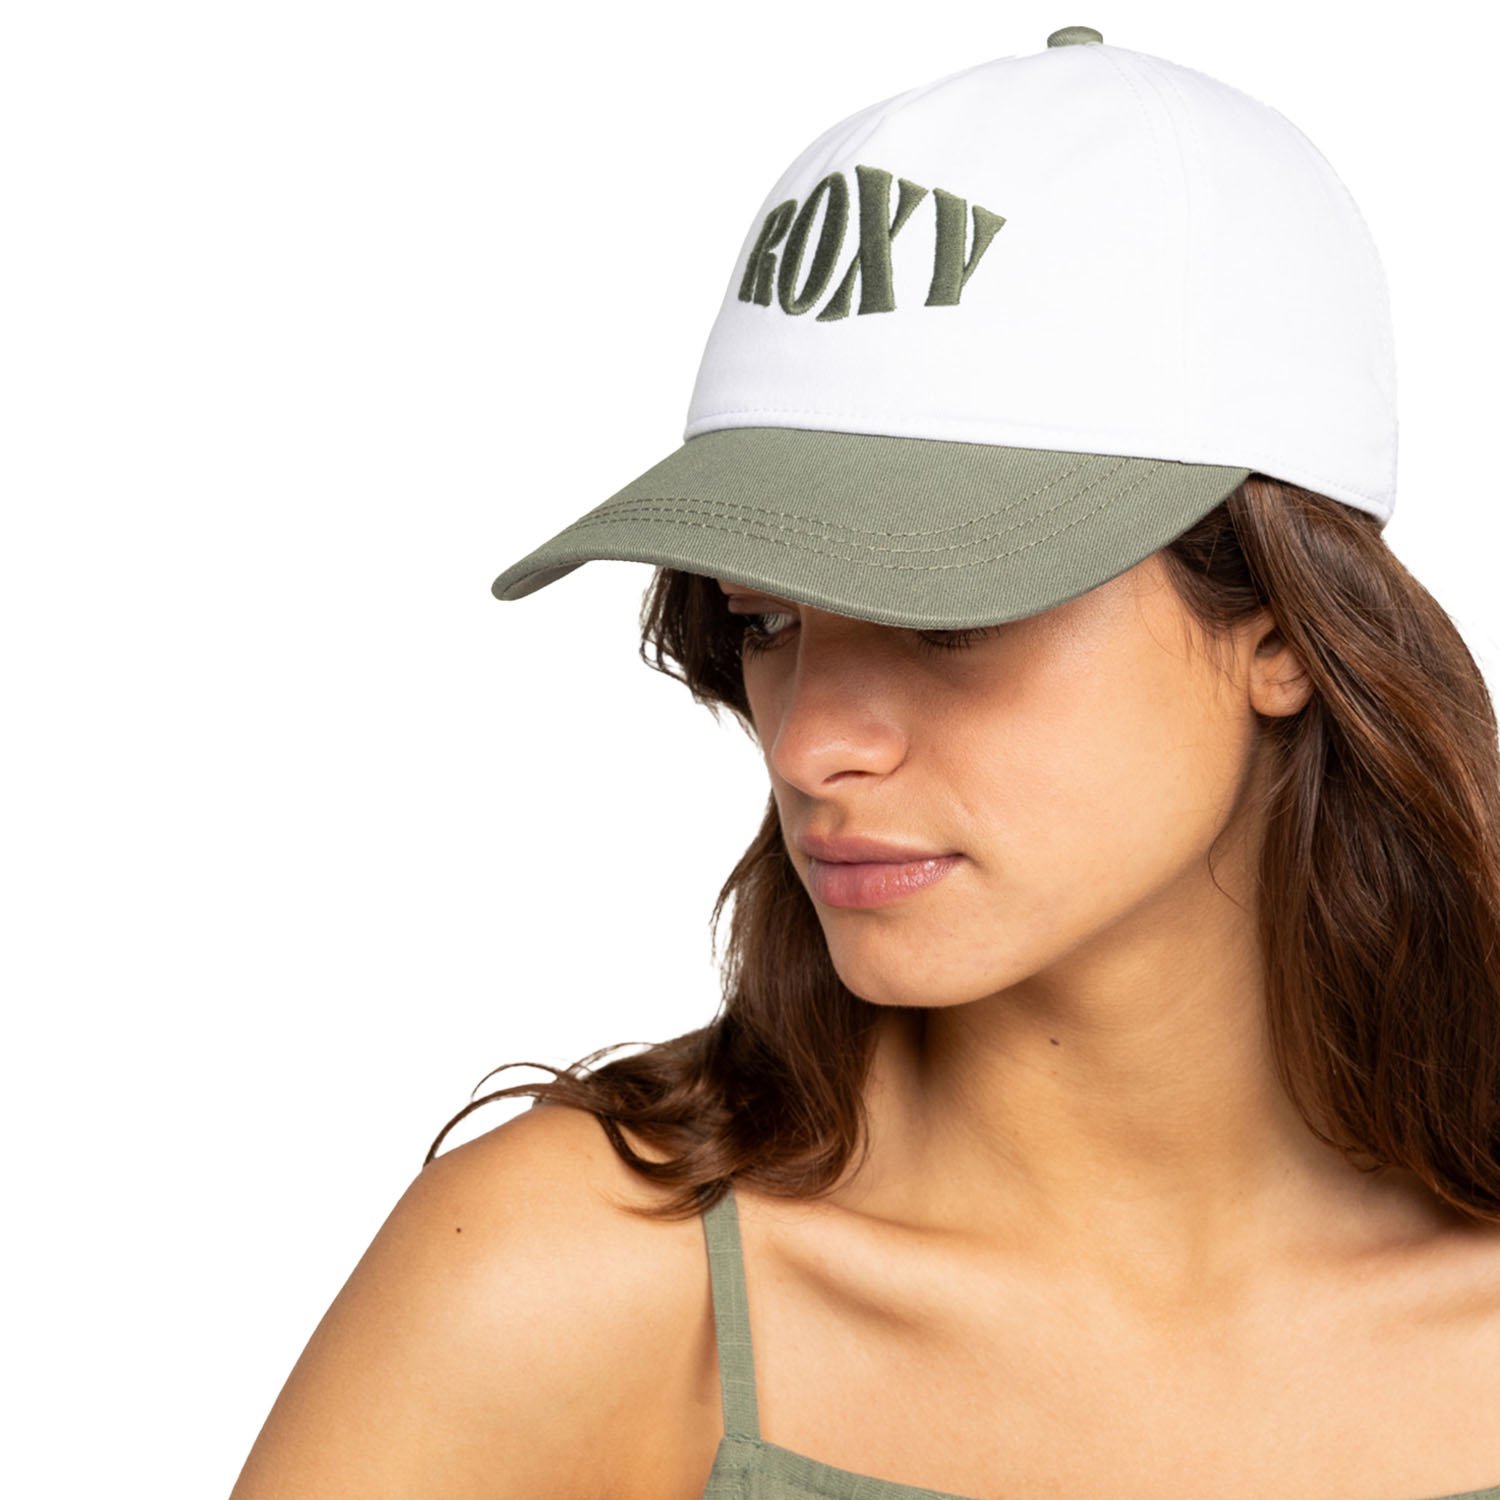 Roxy Something Magic Şapka - Yeşil - 1